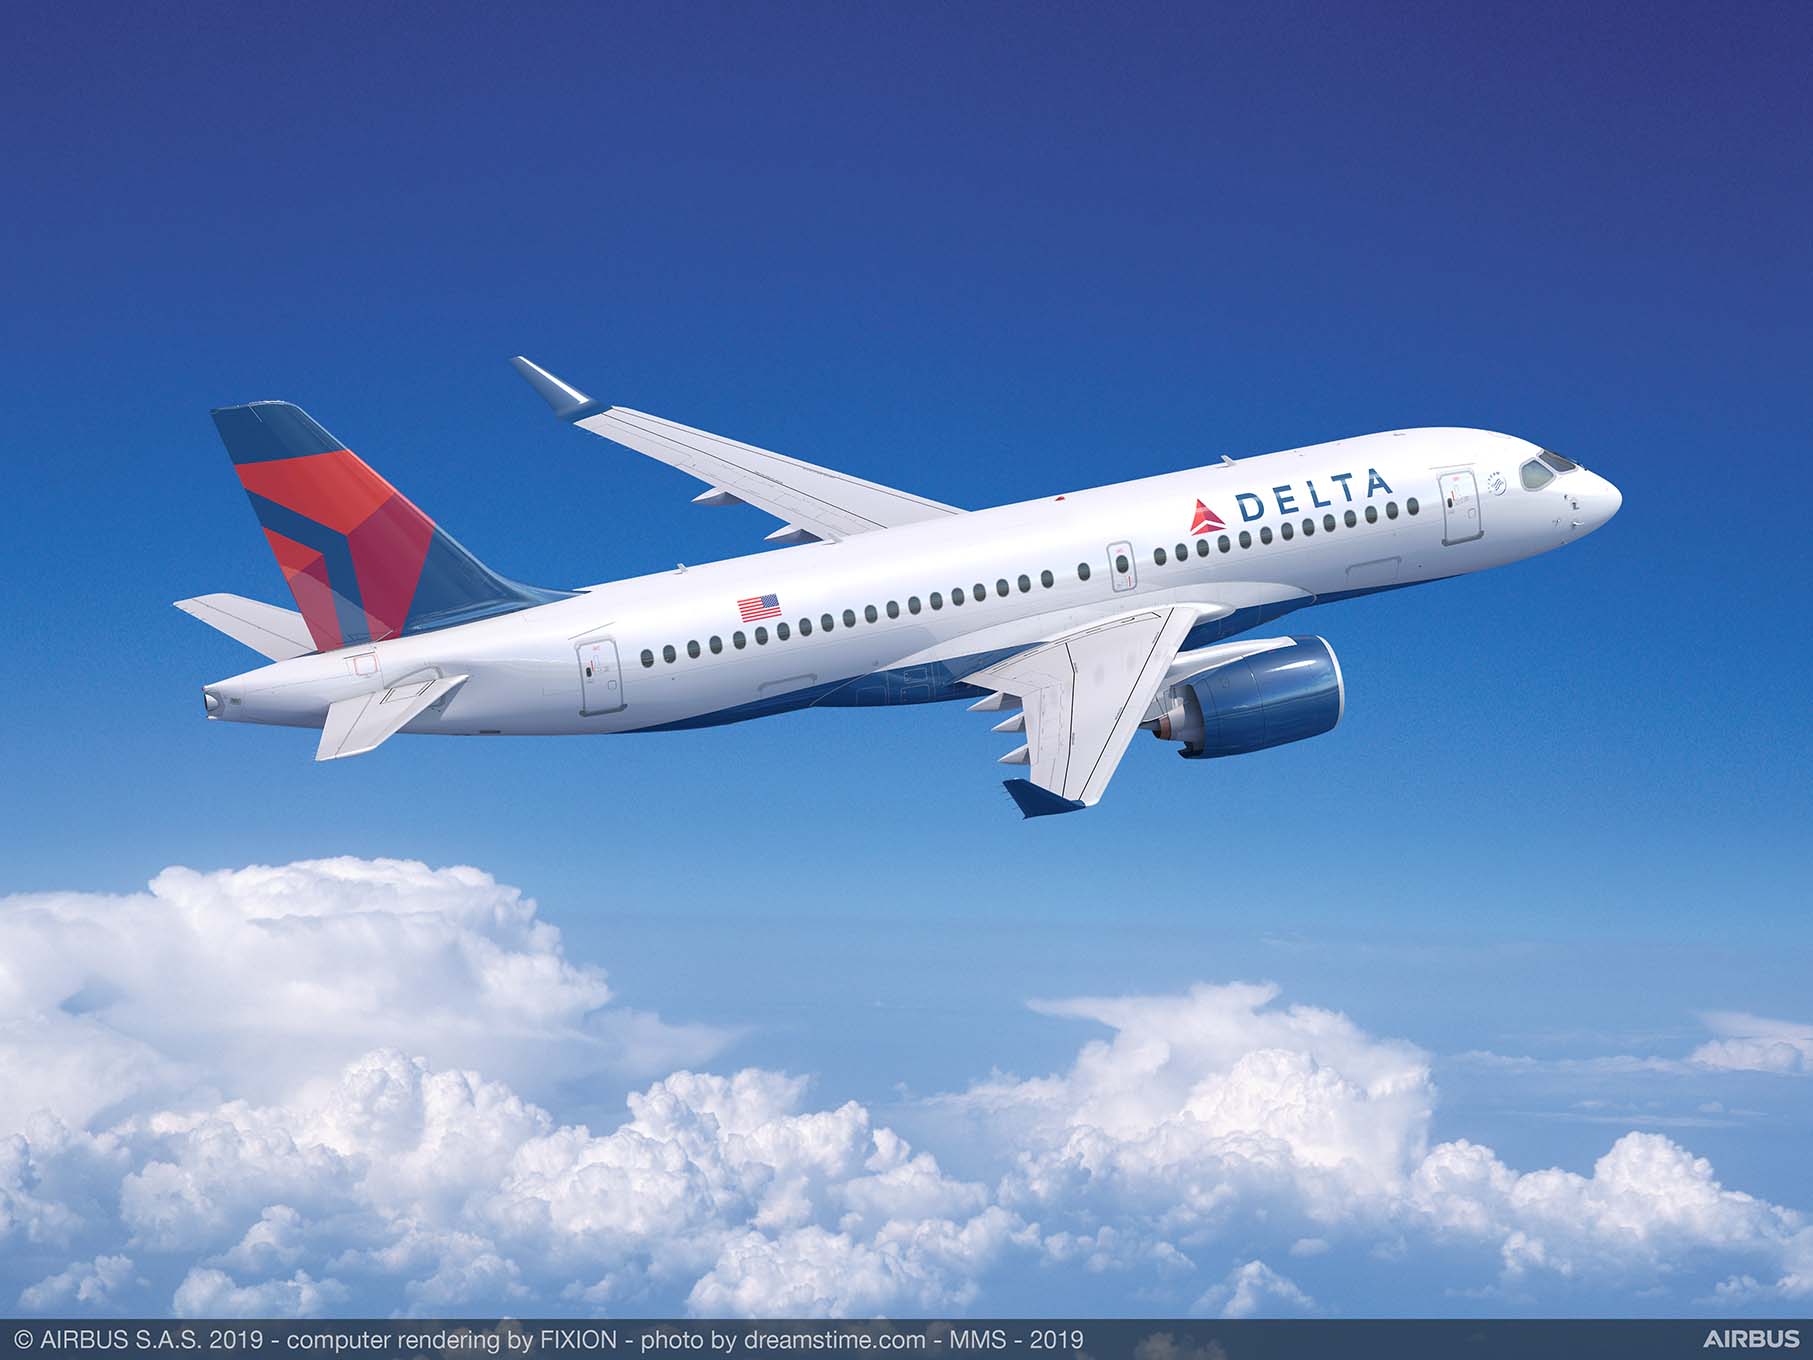 Delta and Southwest “relative winners” of US airline fleet overhaul – Cowen